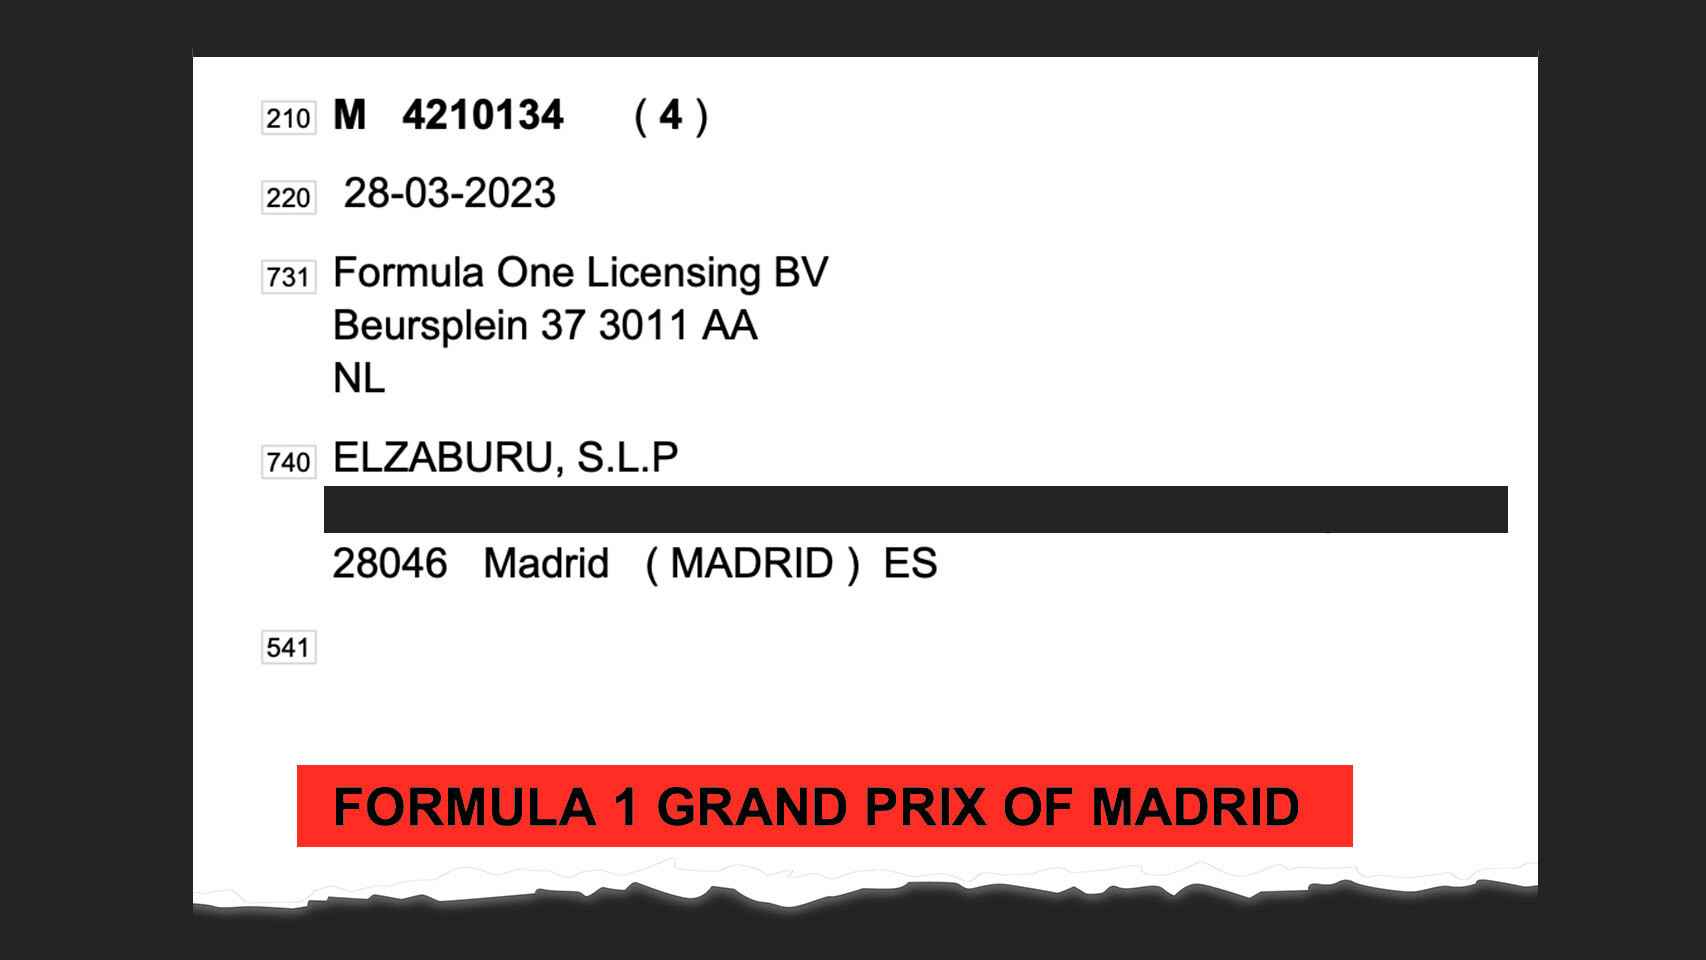 Captura del Boletín Oficial de la Propiedad de Formula 1 Madrid Grand Prix.